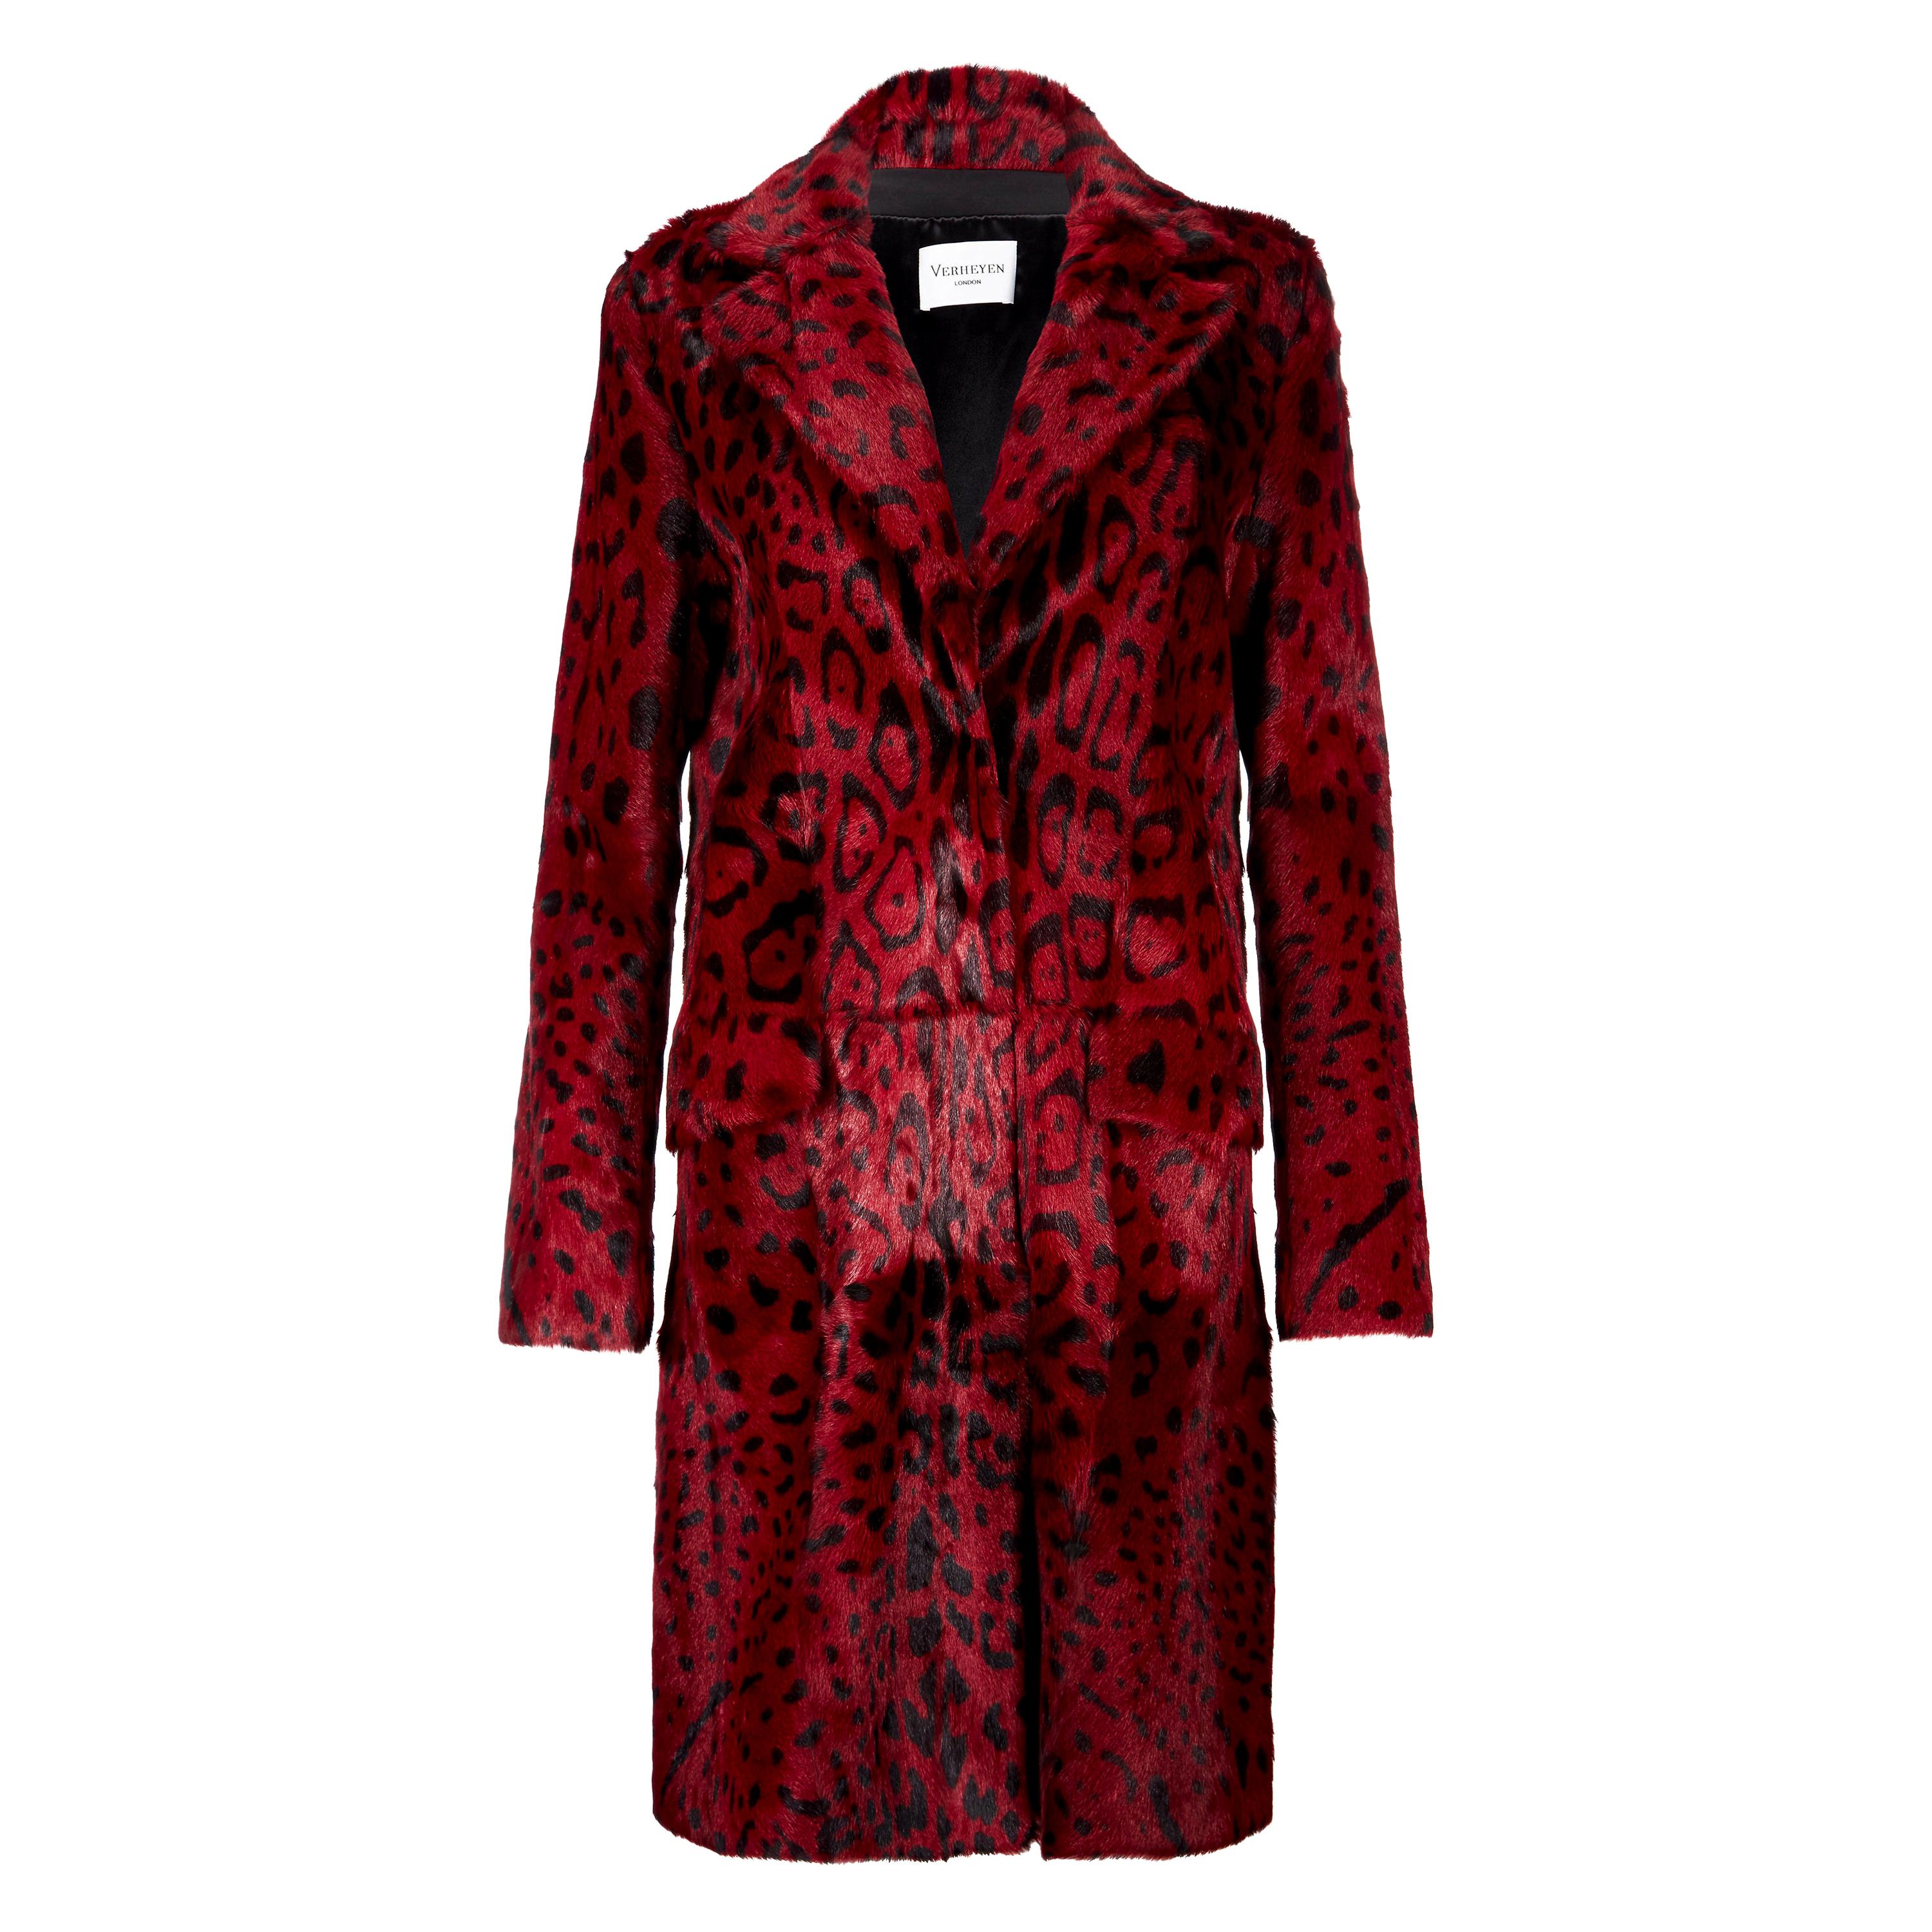 Verheyen London Leopard Print Coat in Red Ruby Goat Hair Fur UK 10 - Brand New  For Sale